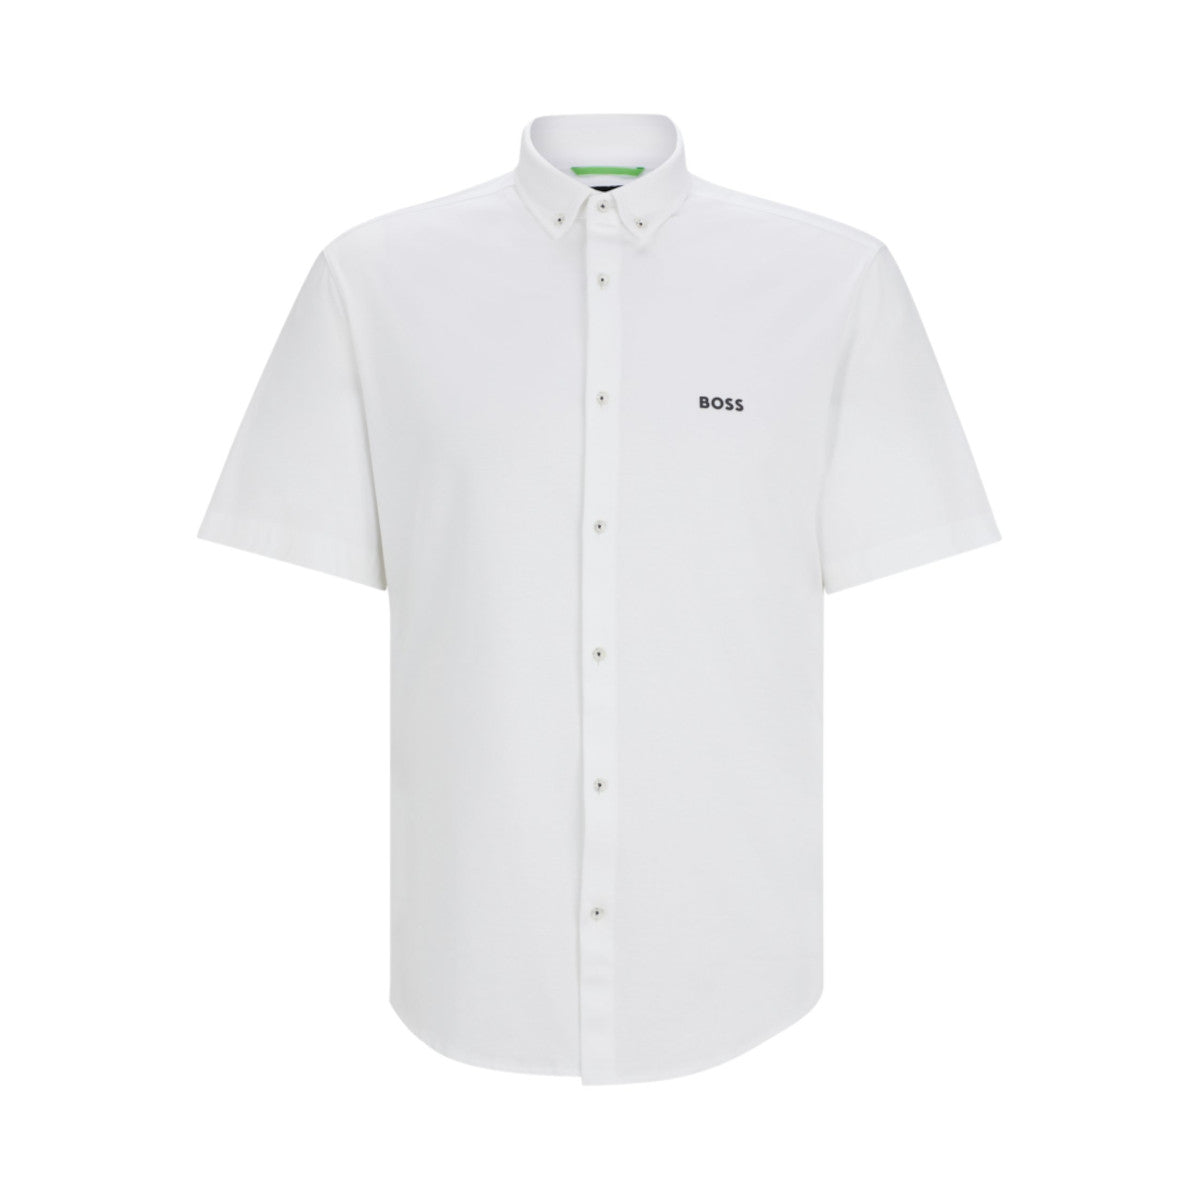 BOSS Green B_Motion_S Shirt 10233753 100 White